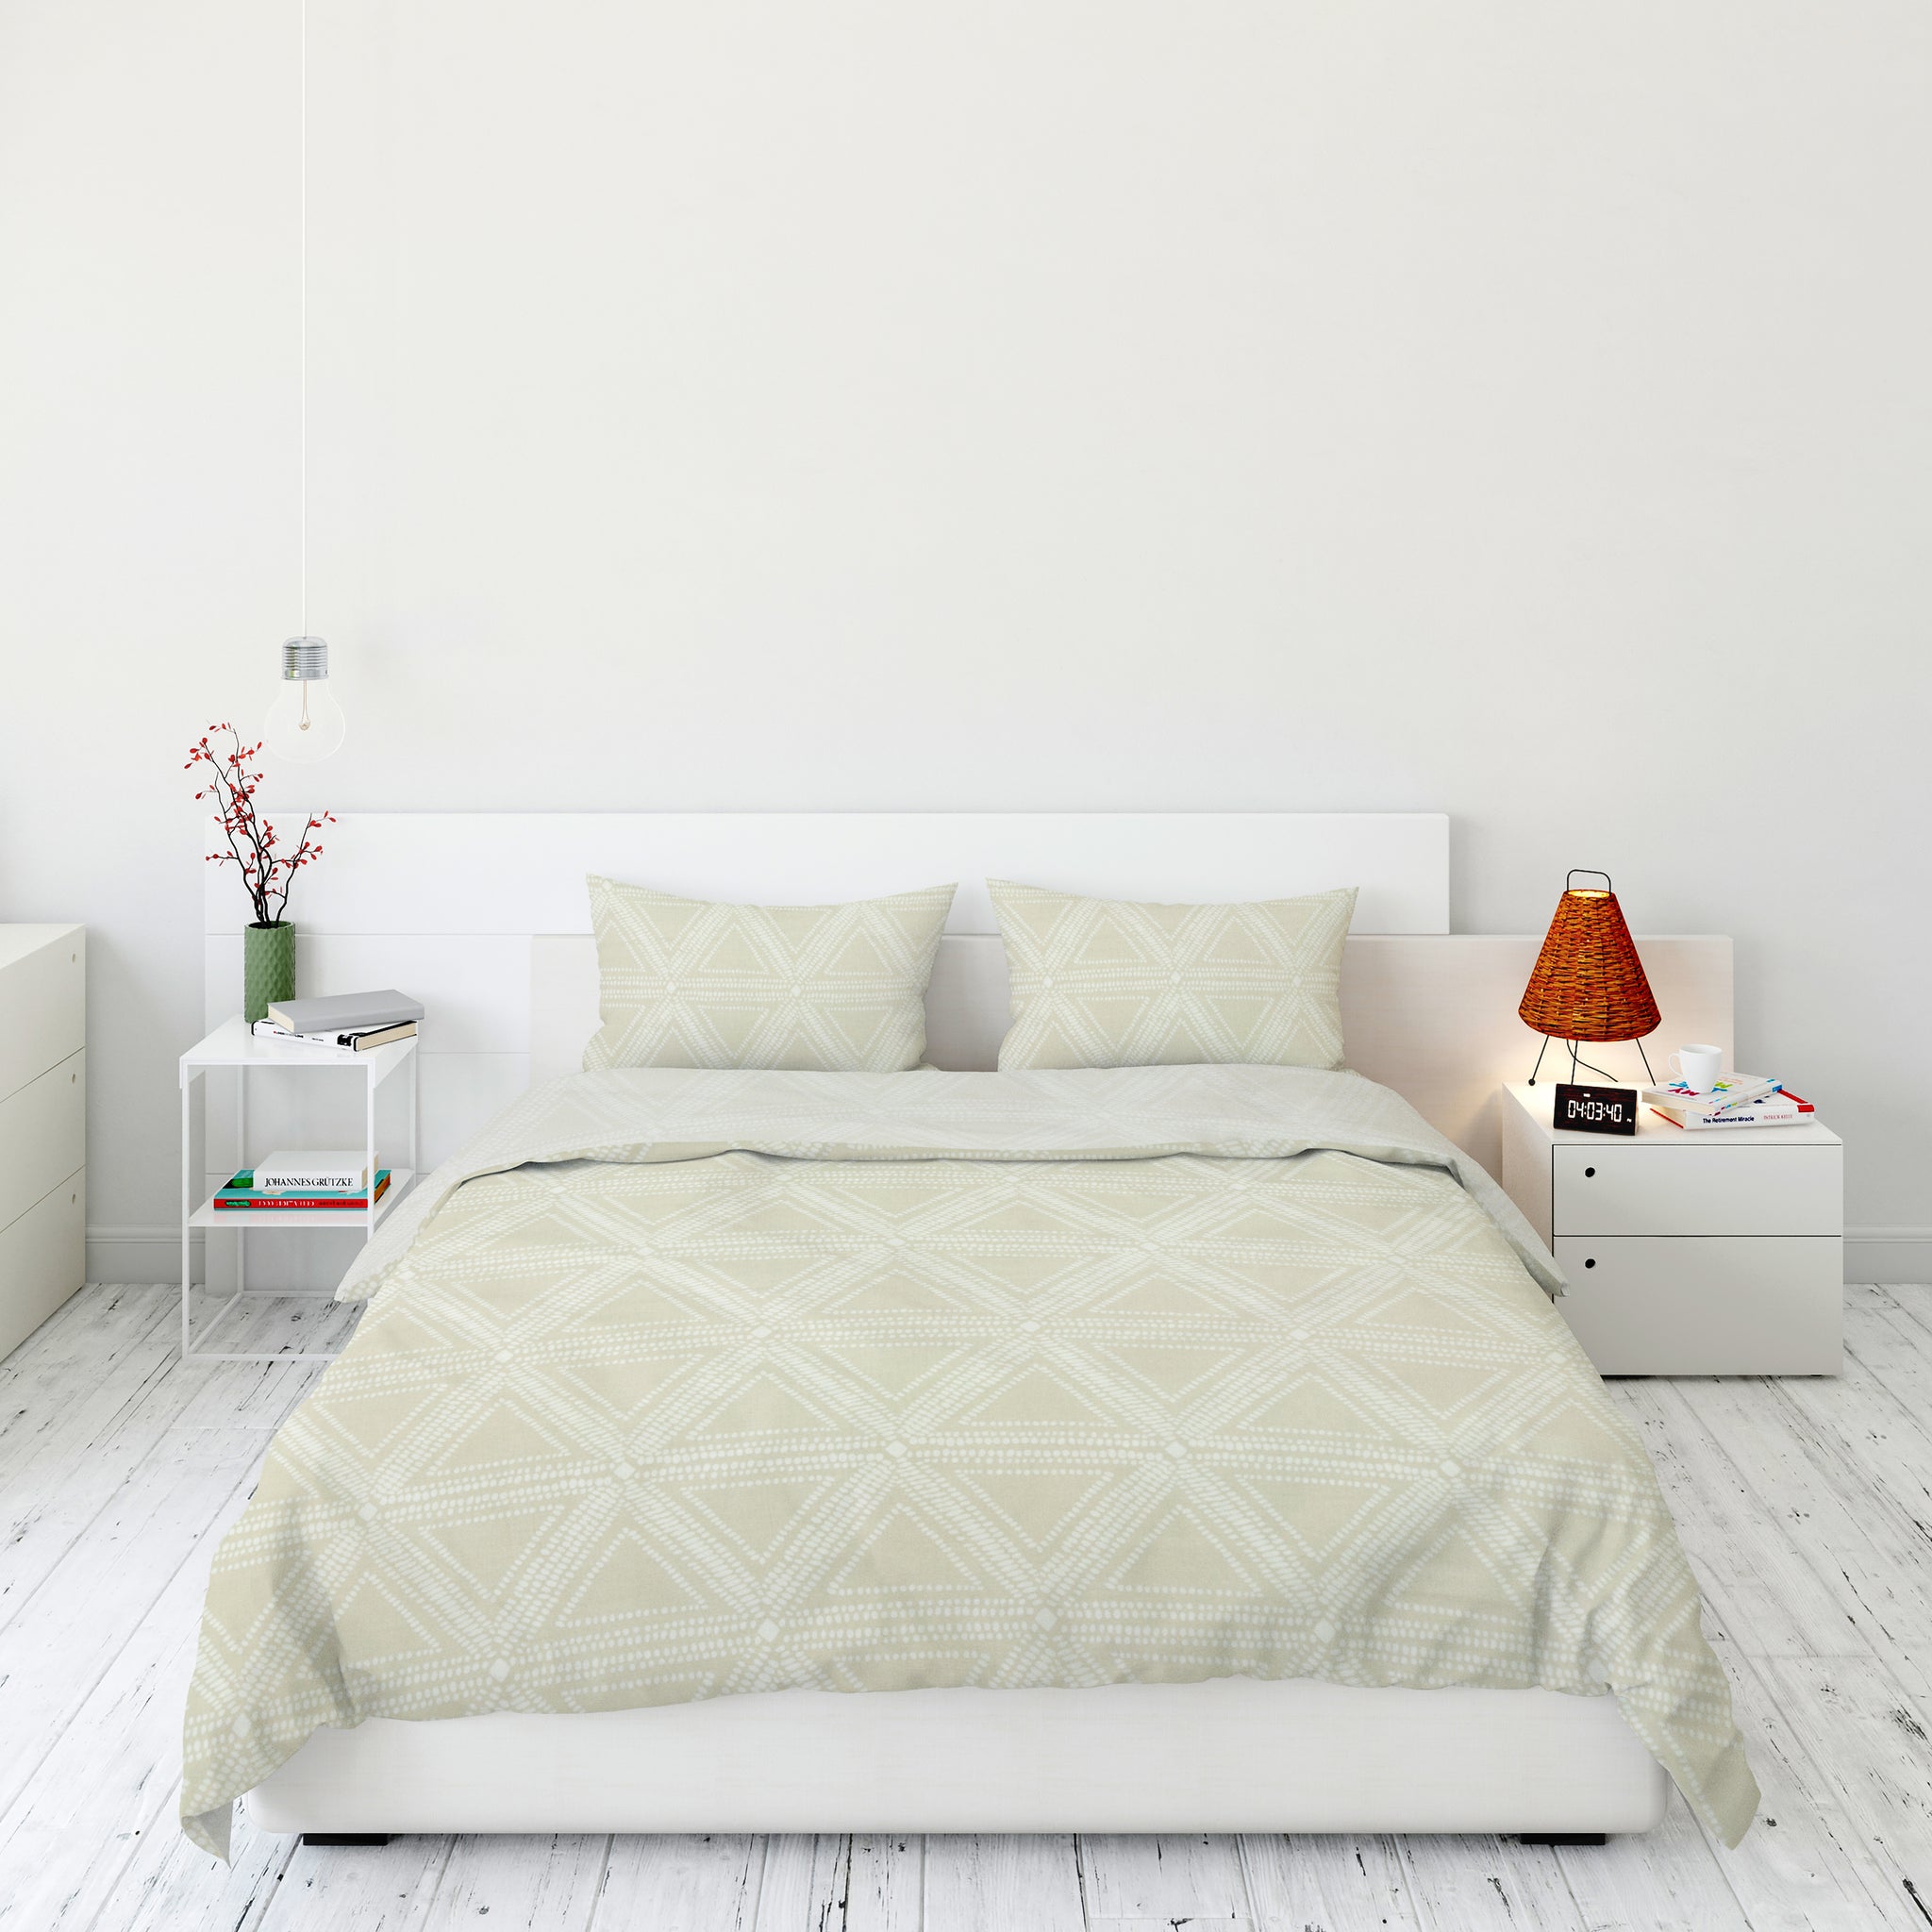 KYOMI Ava Contemporary Printed Bed Sheet